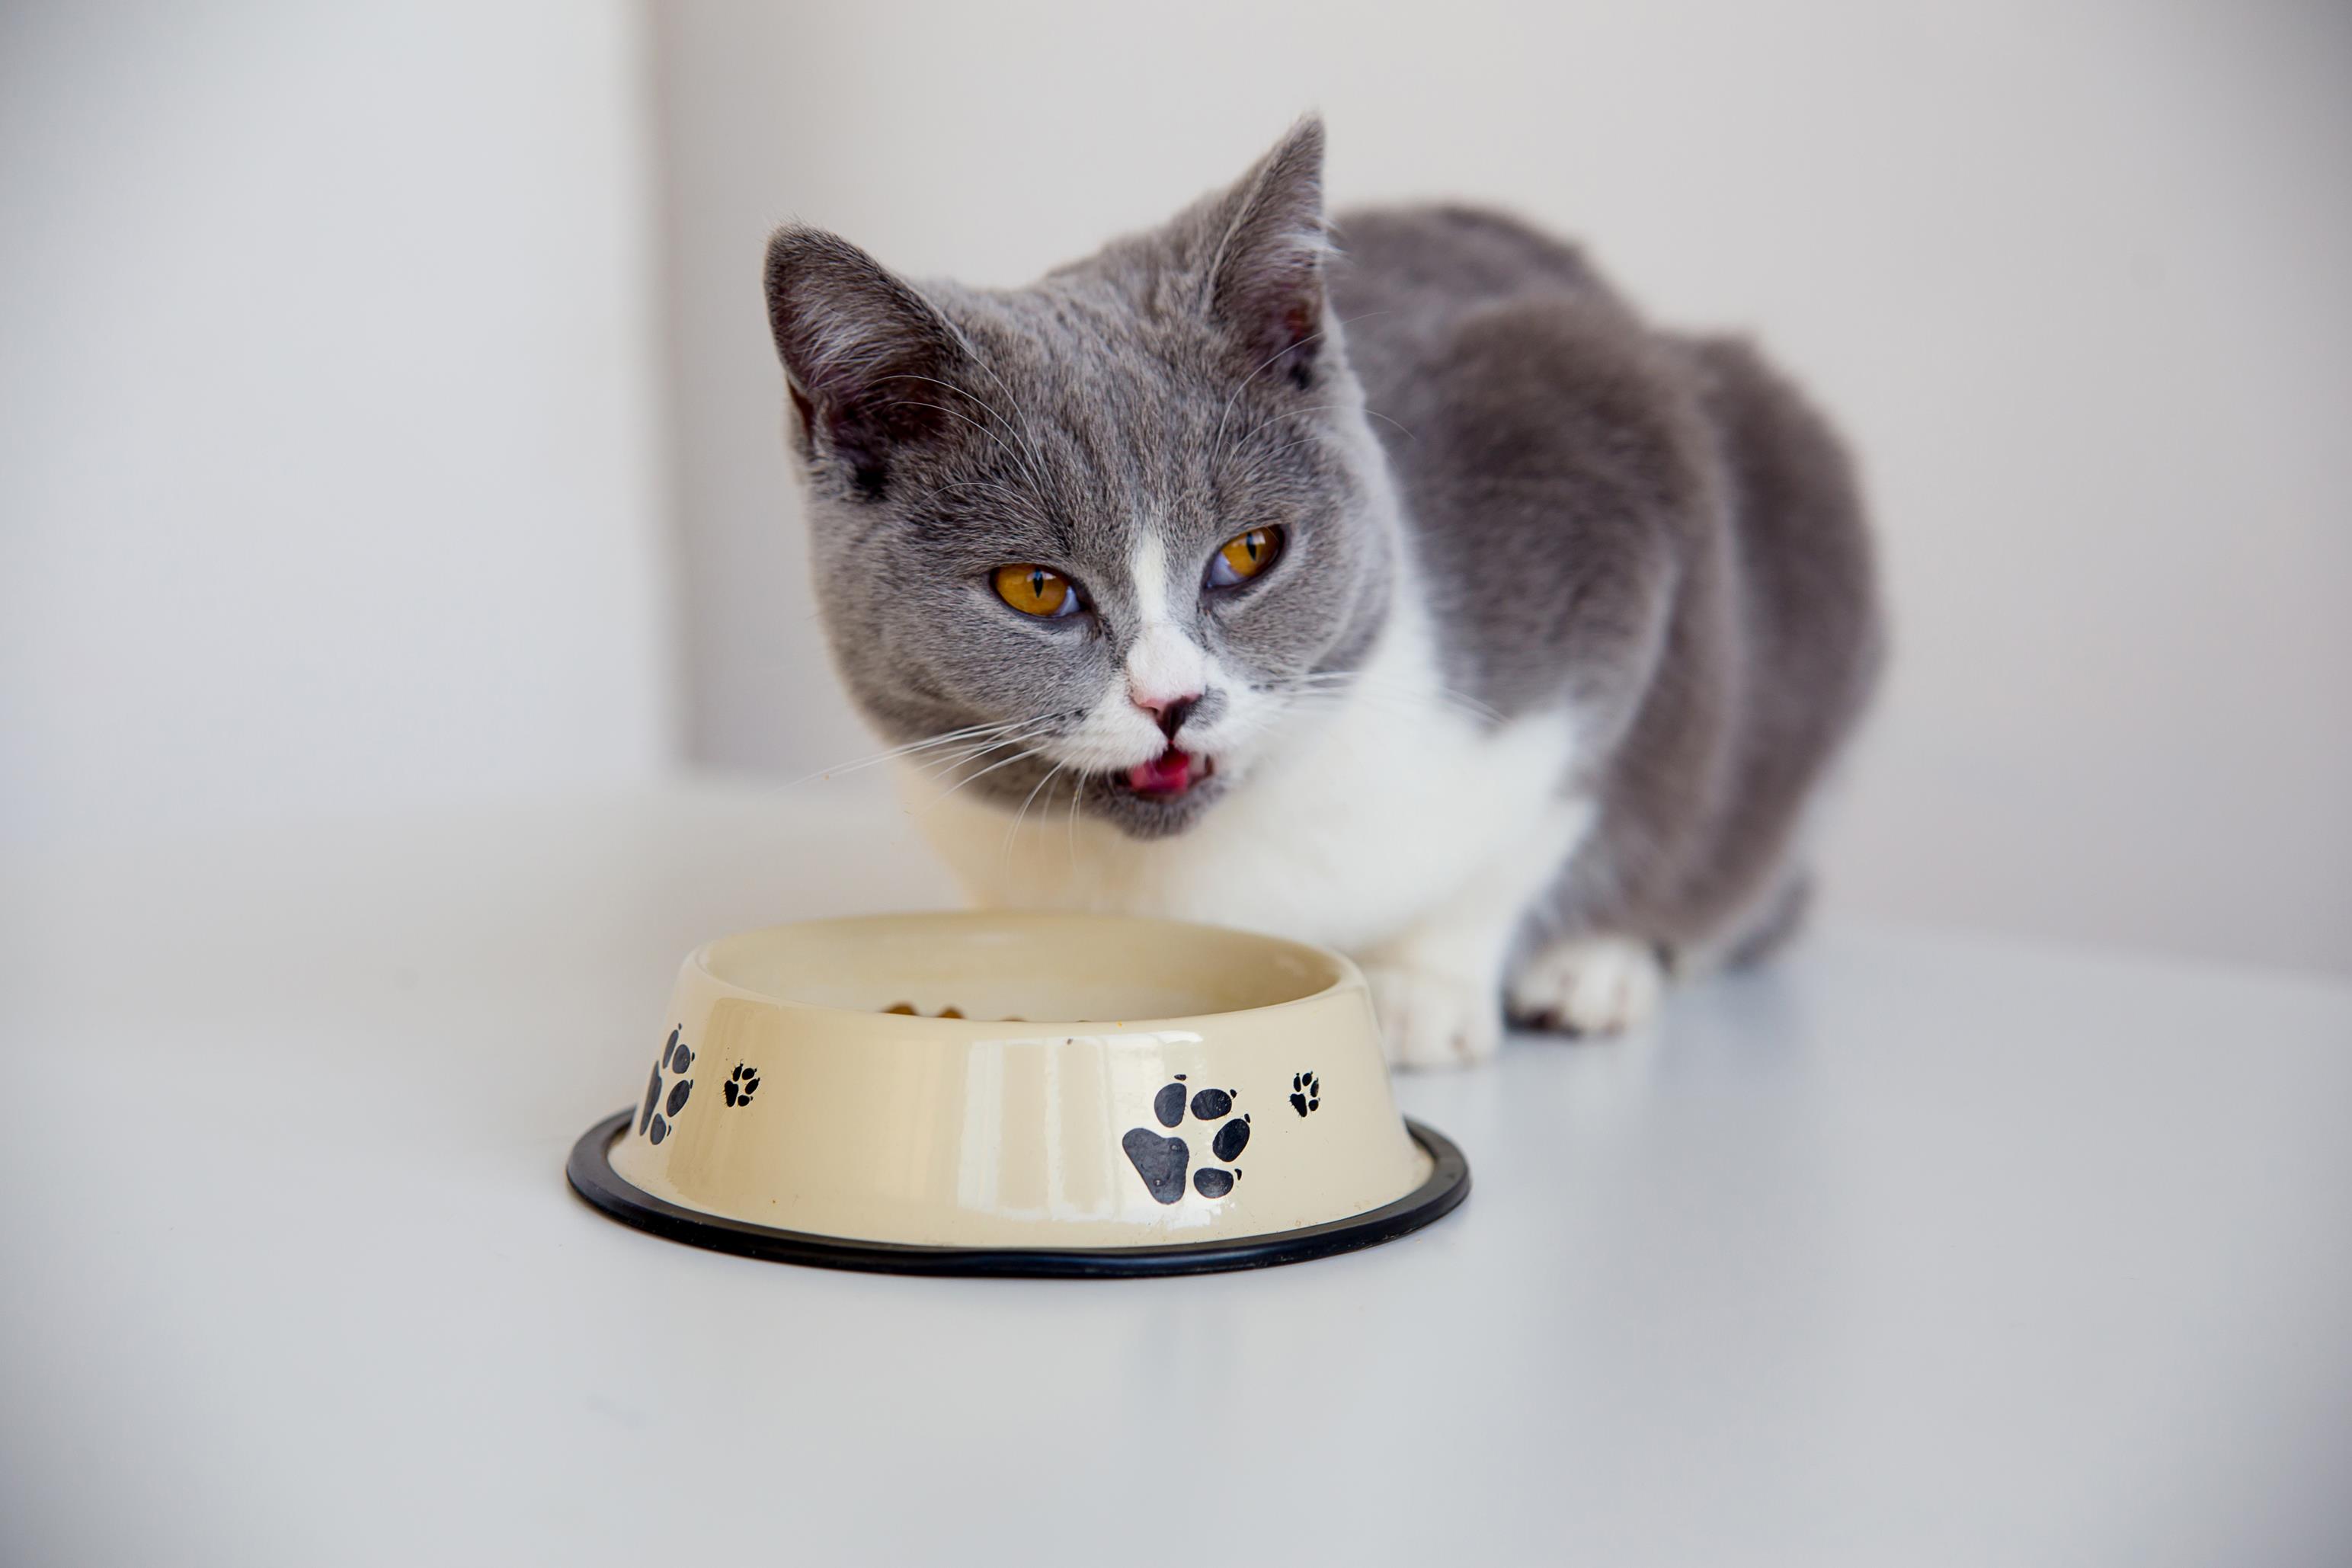 Kot jedzący z miski